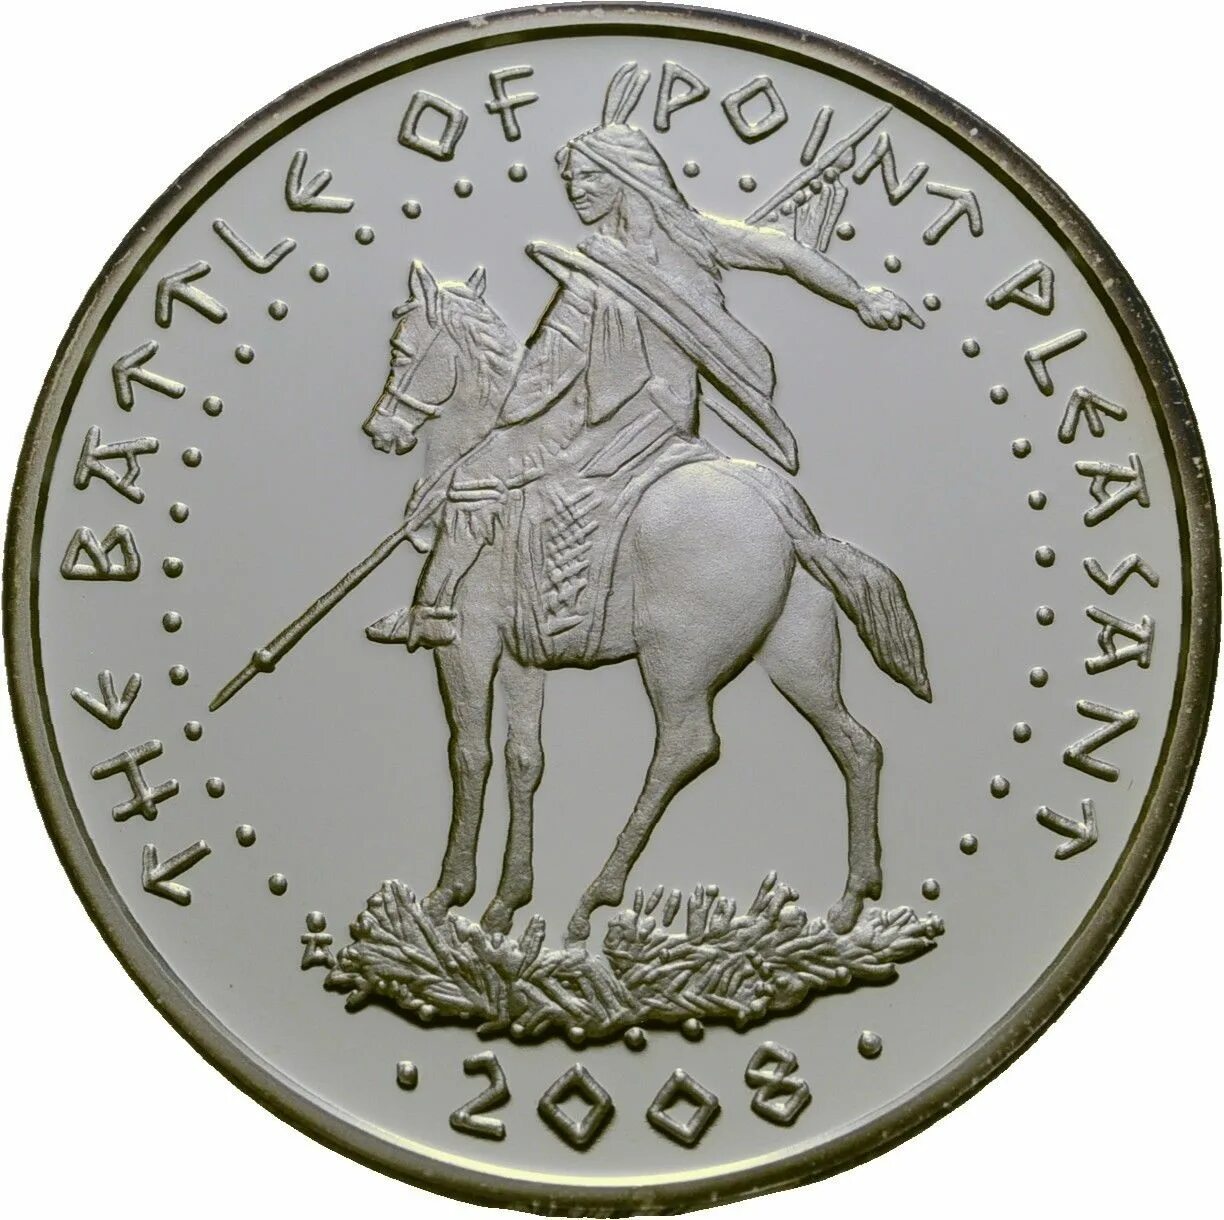 Монета племени Шу. 50 Пойнт монета. 1доллар2009серебро племя индейцев Шауни. Старинные монеты из племени индейцев. Год чеканки монеты